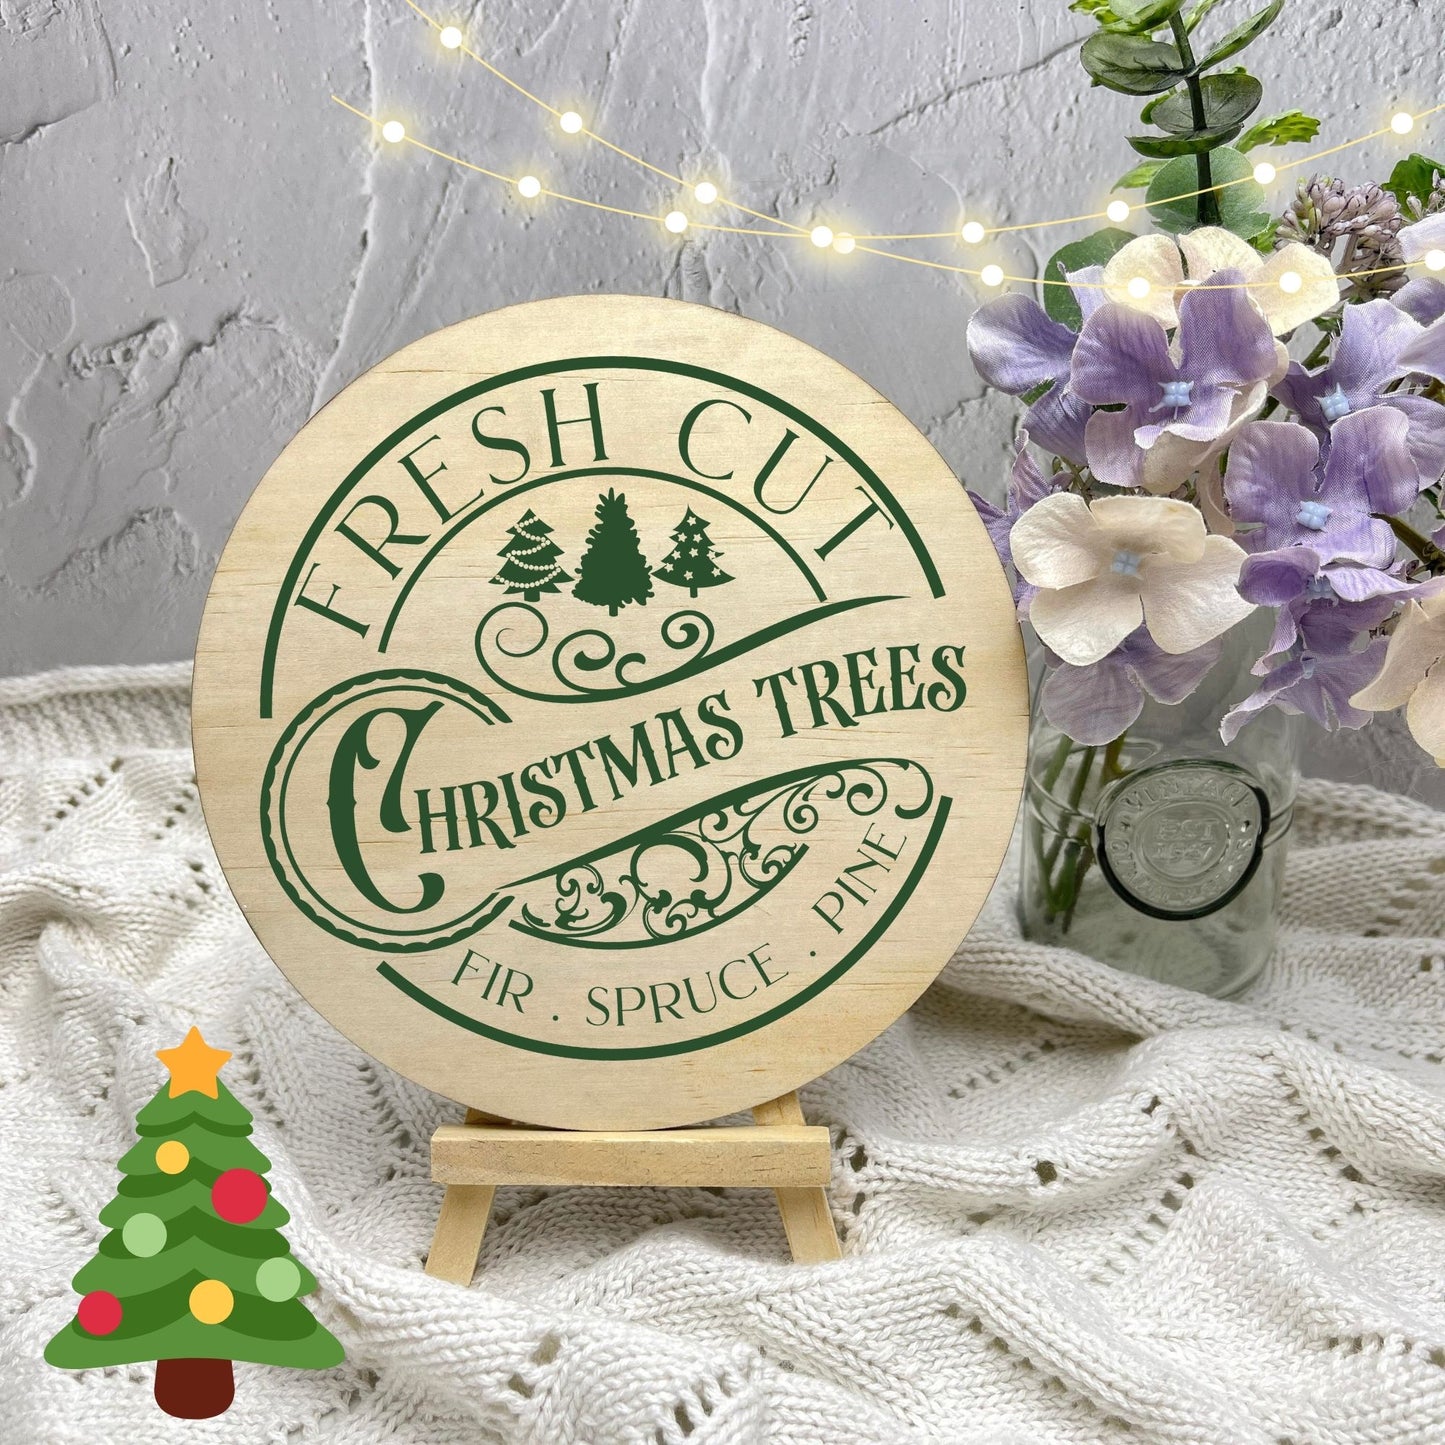 Fresh Cut Christmas Trees Sign, Seasonal Decor, Holidays decor, Christmas Decor, festive decorations c13